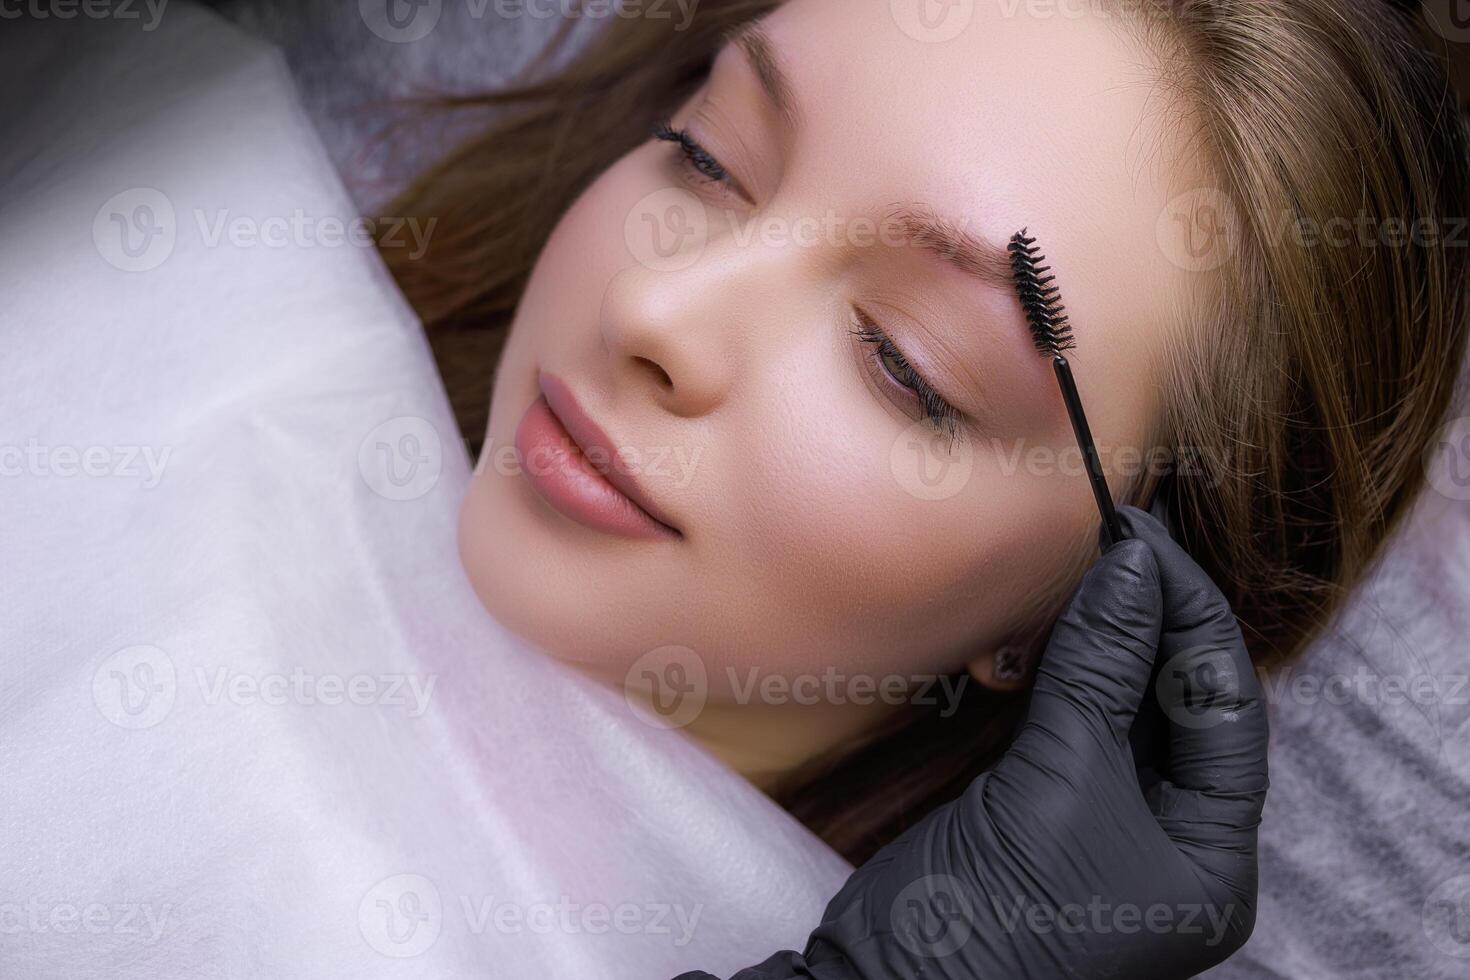 Eyebrow shape correction before the permanent makeup procedure using tweezers and a brush. PMU Procedure, Permanent Eyebrow Makeup. photo